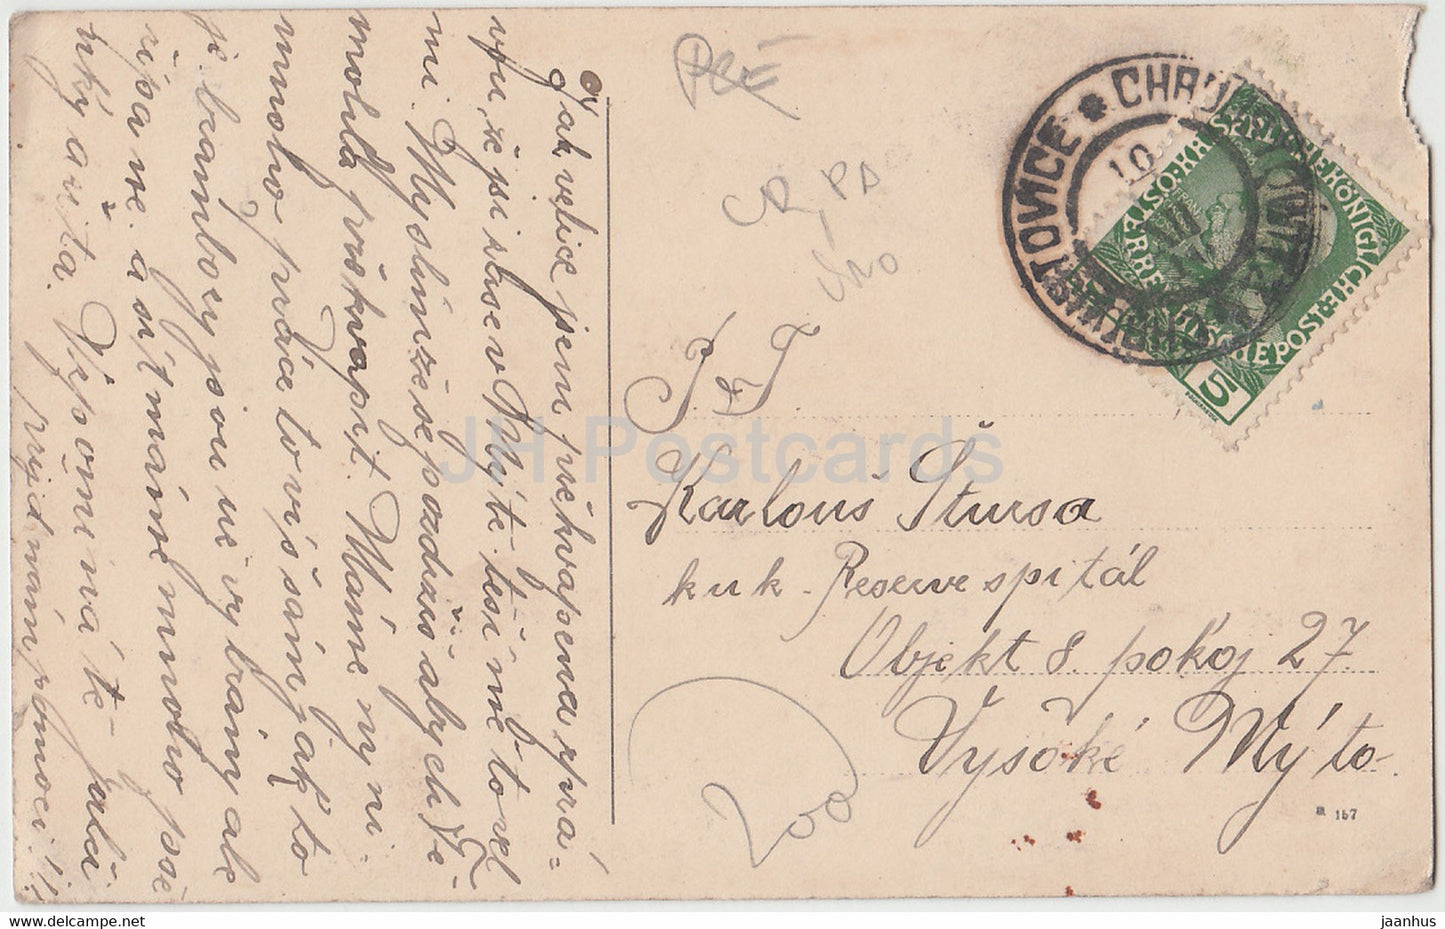 Ostrov - old postcard - Czech Republic - used